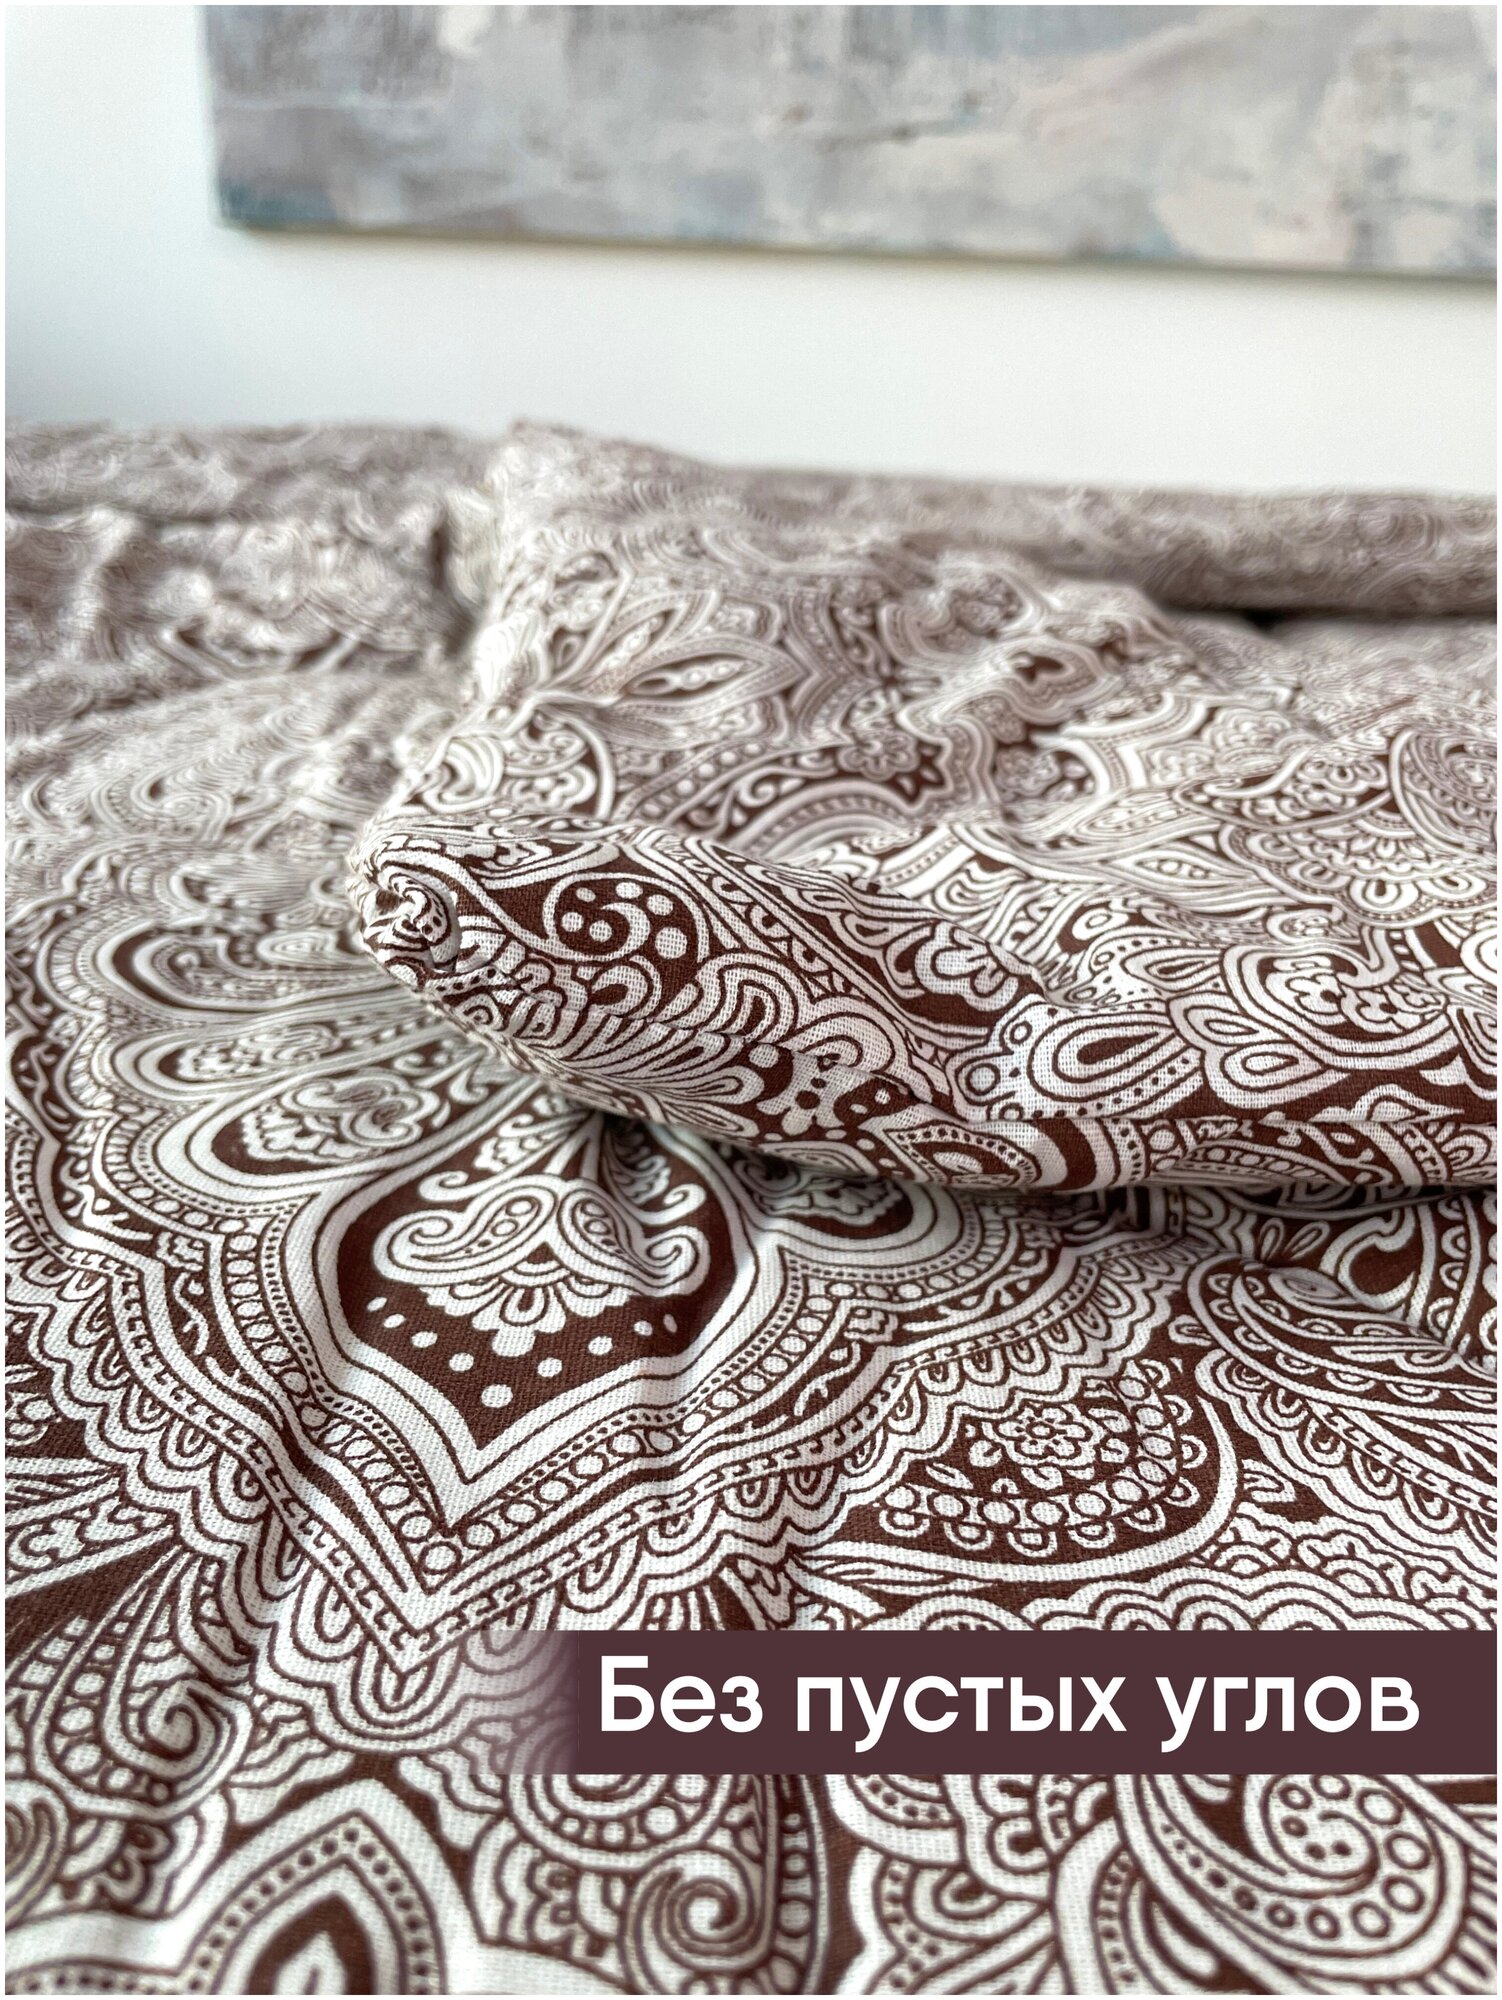 Одеяло Ватное с наполнителем Вата "Прима" Евро (200х220 см), чехол - Бязь эксклюзив - фотография № 4